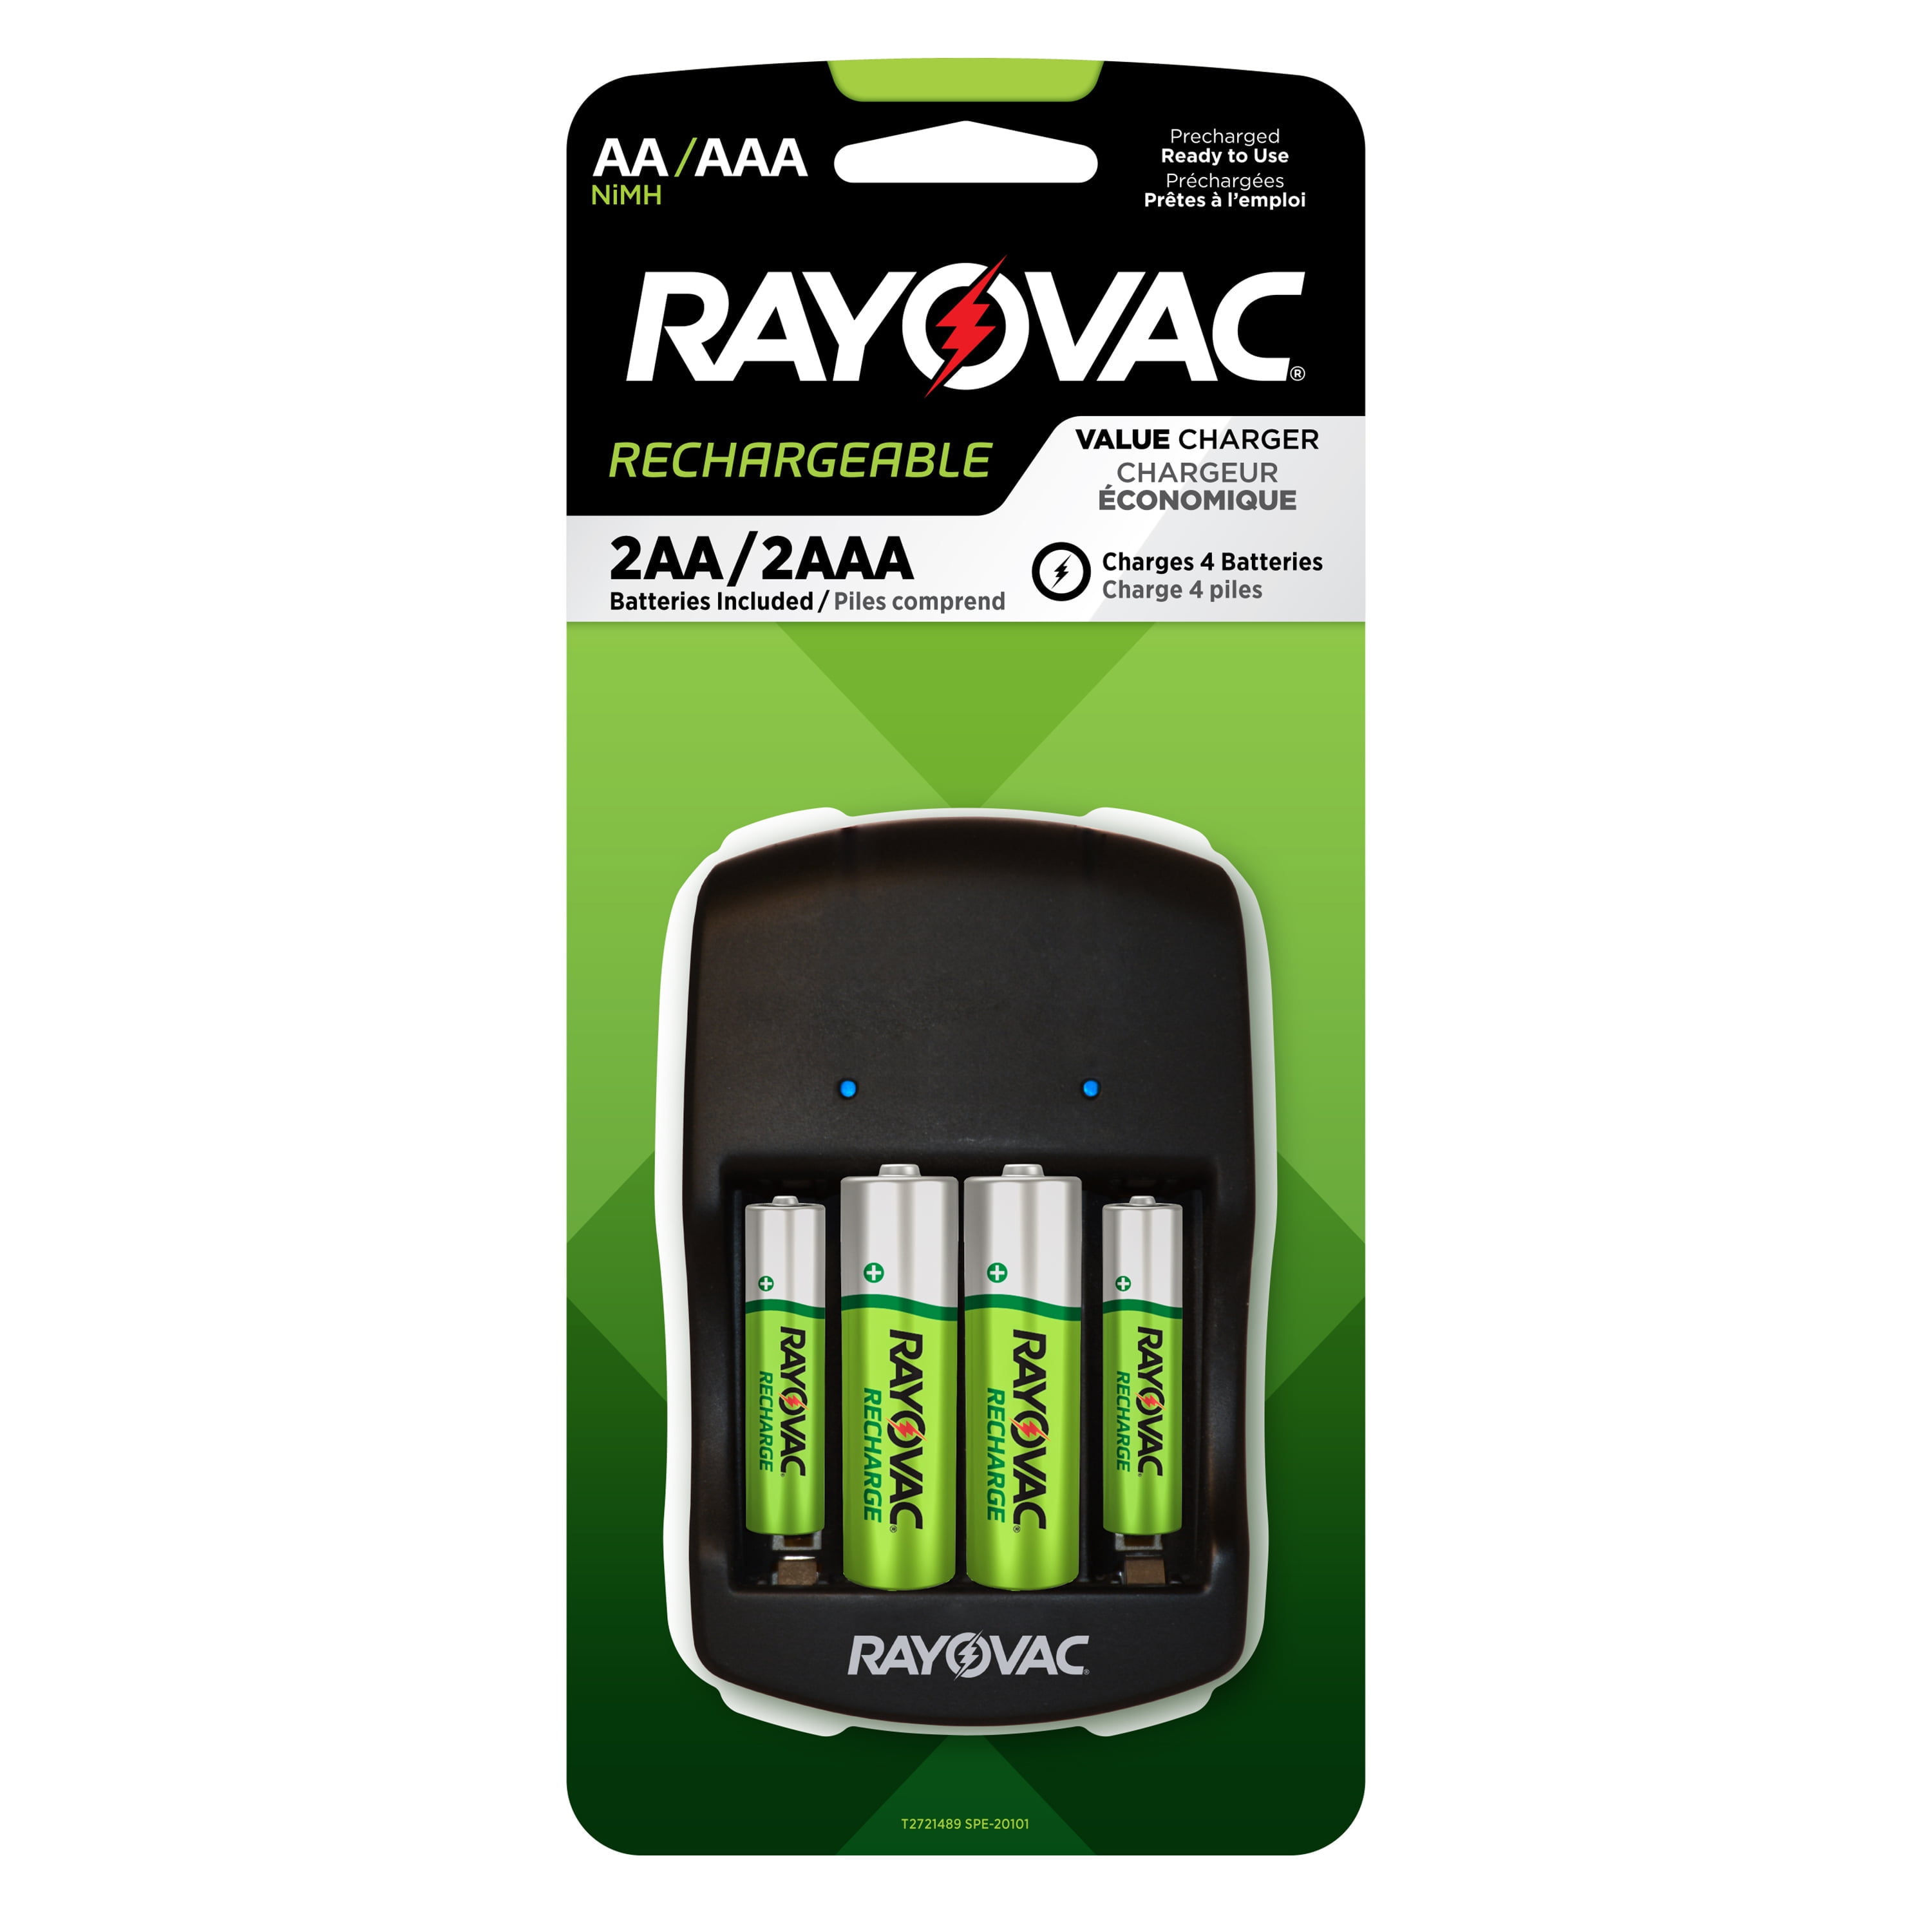 Rayovac AA and AAA Rechargeable Battery Charger, Includes NiMh 2 AA and AAA Rechargeable Batteries - Walmart.com